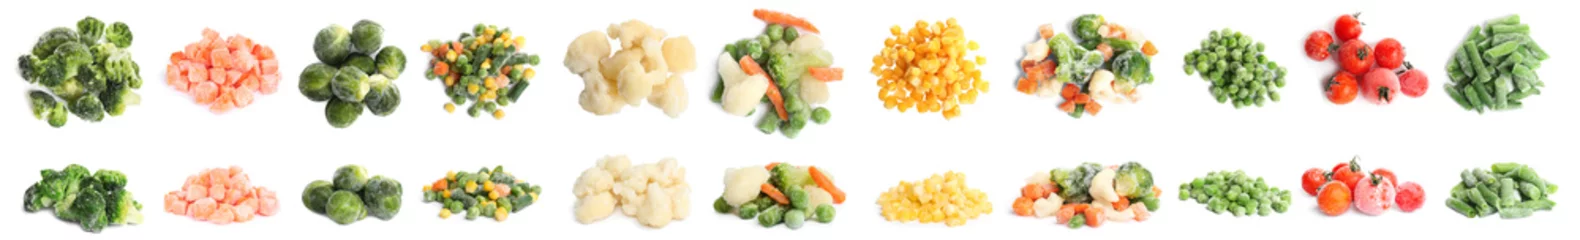 Fotobehang Verse groenten Set of different frozen vegetables on white background. Banner design